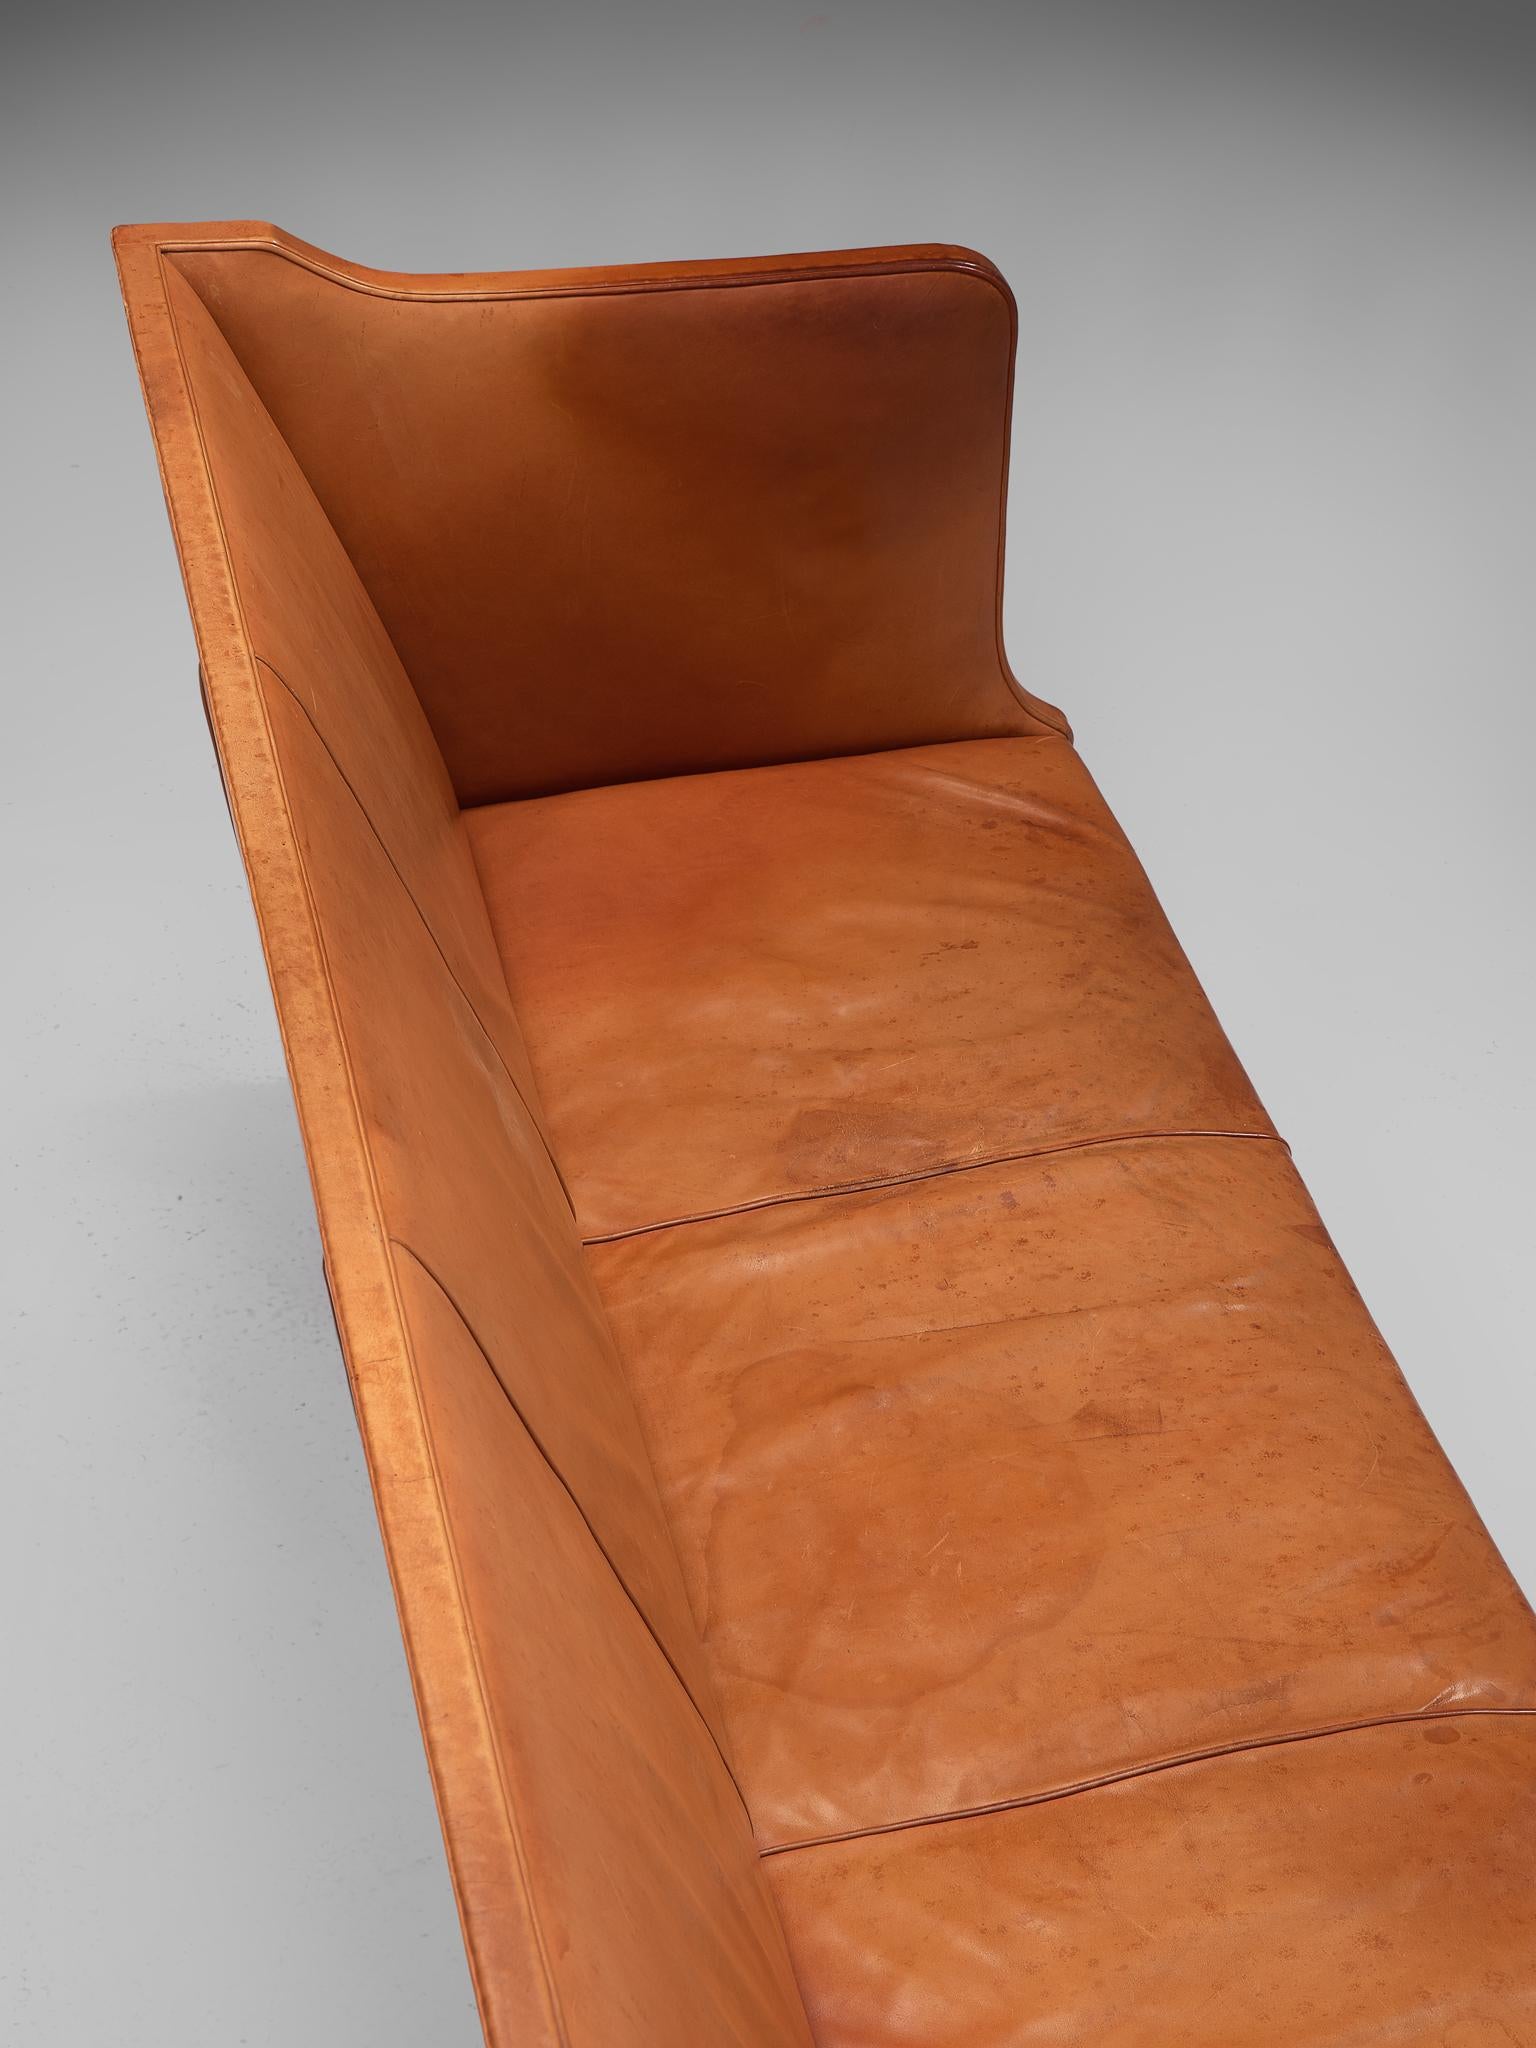 Kaare Klint Early Sofa in Cognac Leather for Rud Rasmussen 1